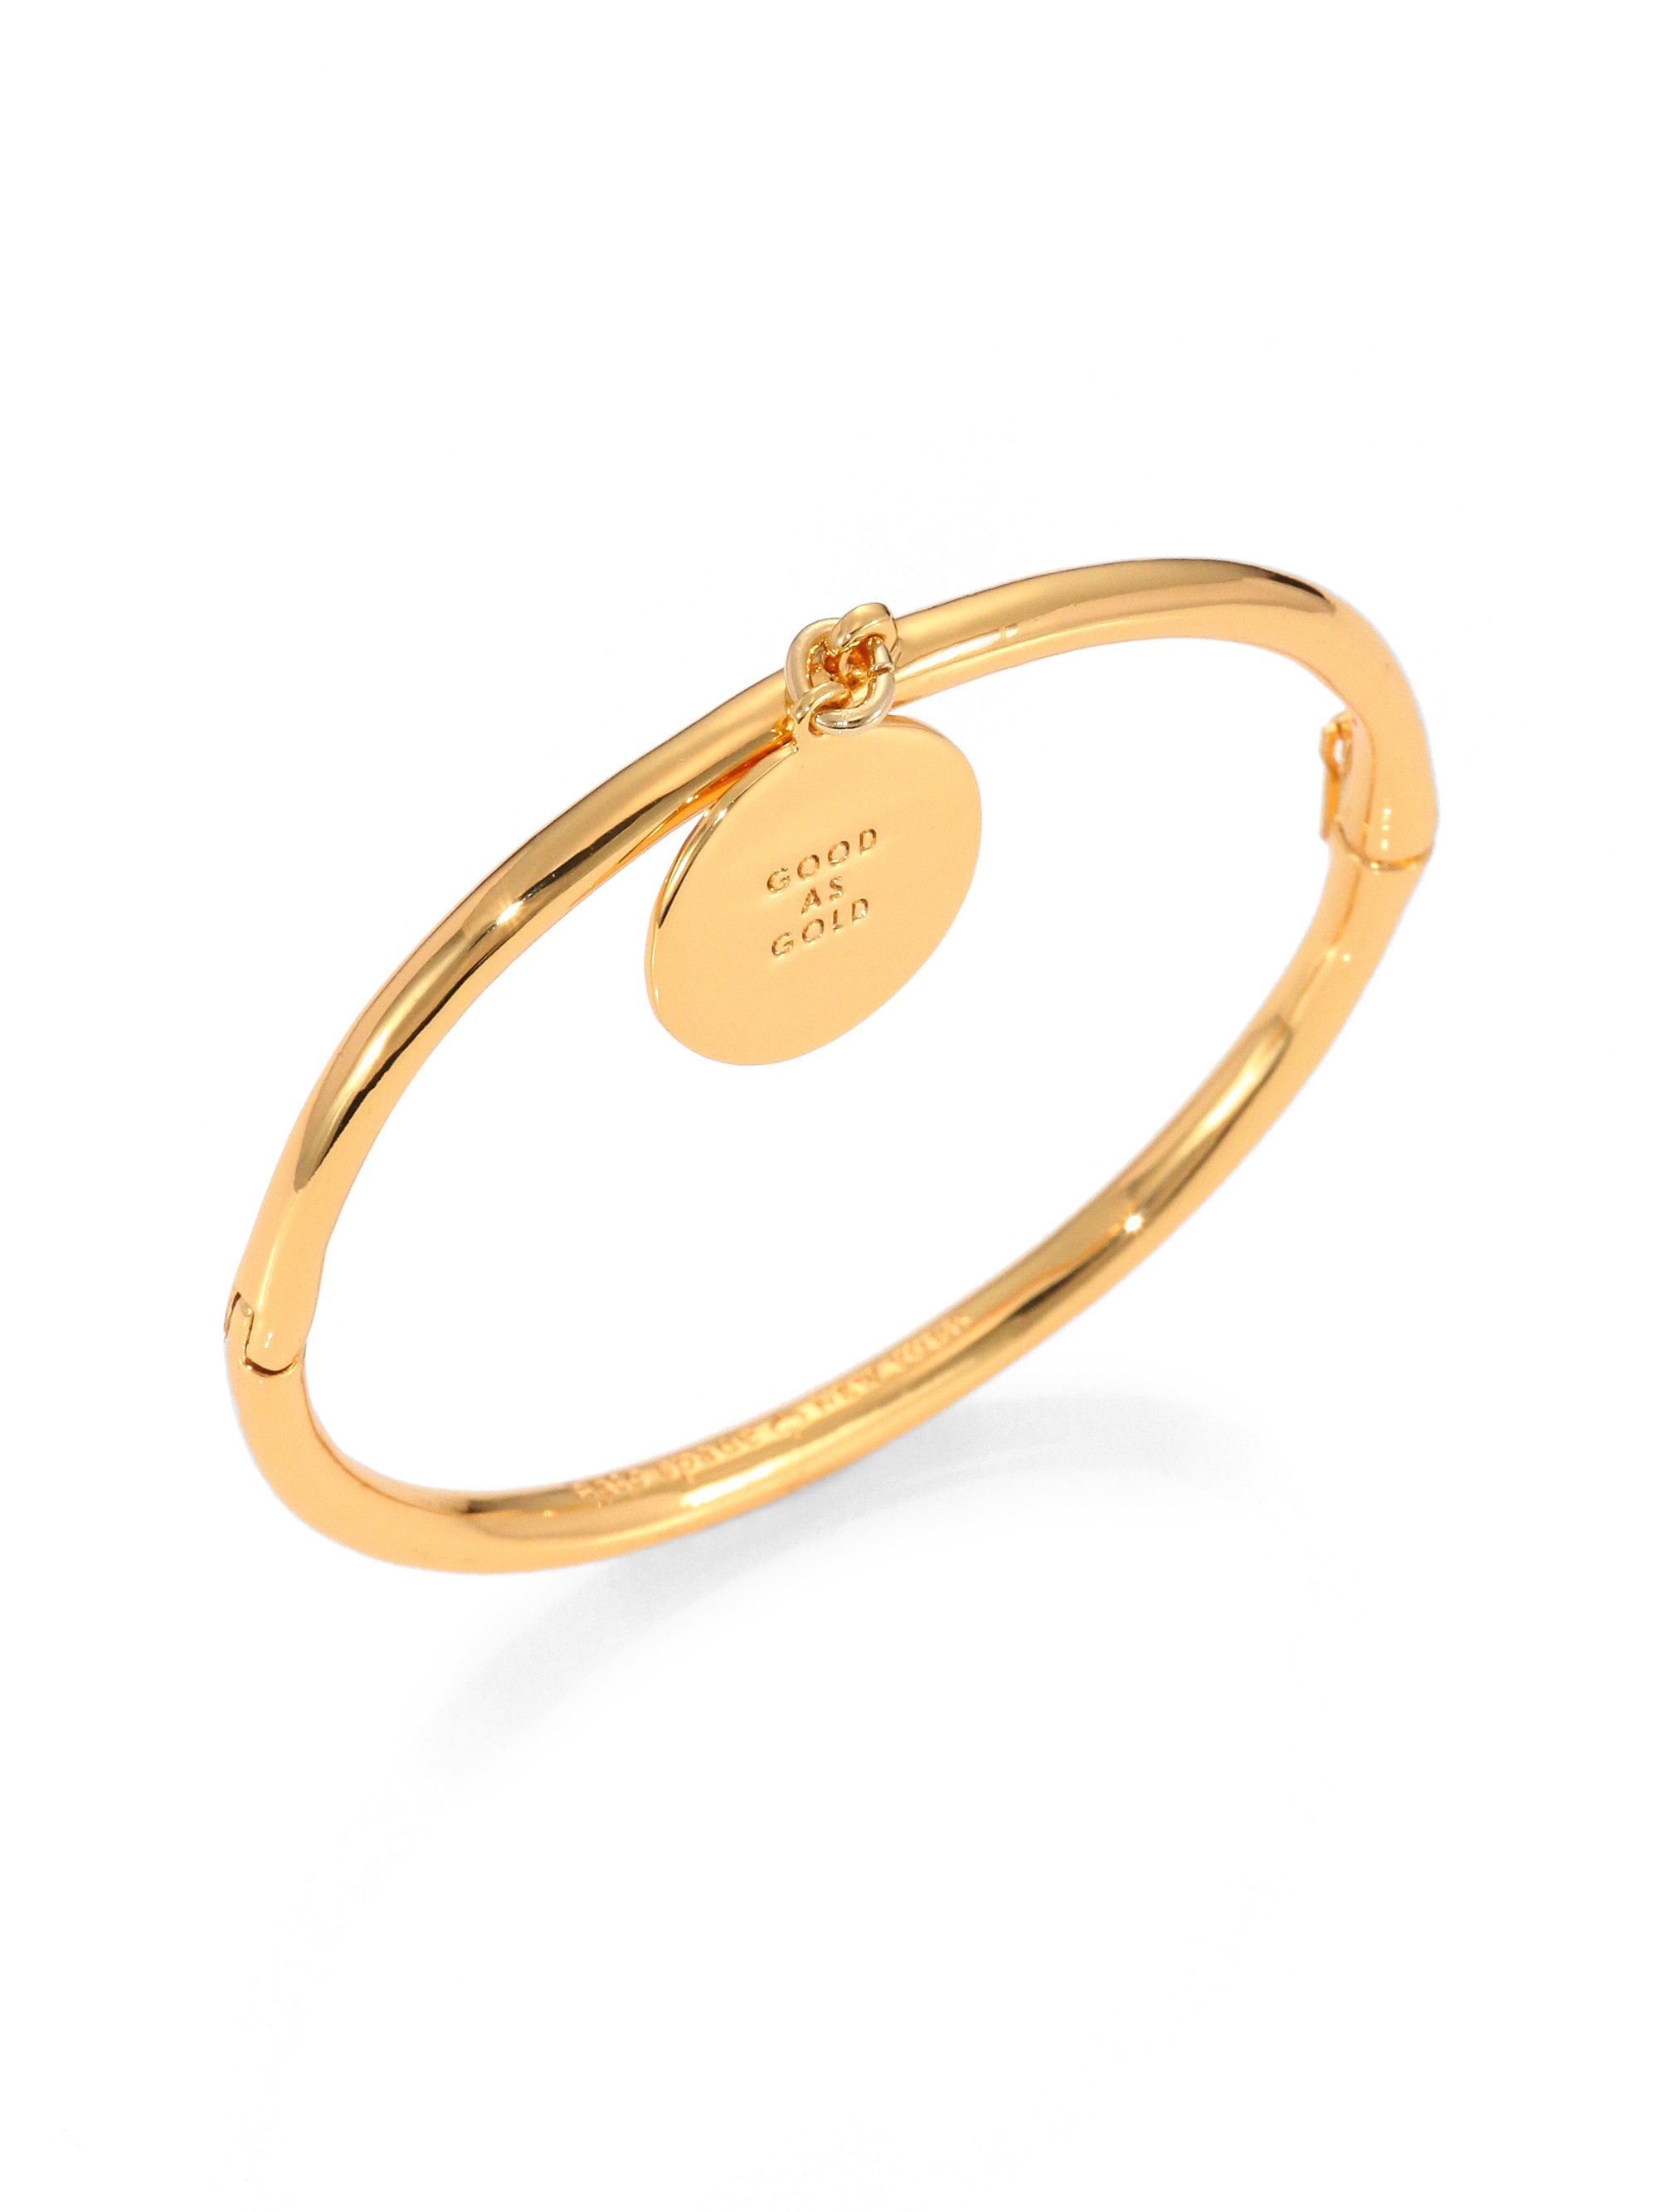 Lyst - Kate Spade New York Good As Gold Charm Bangle Bracelet in Metallic